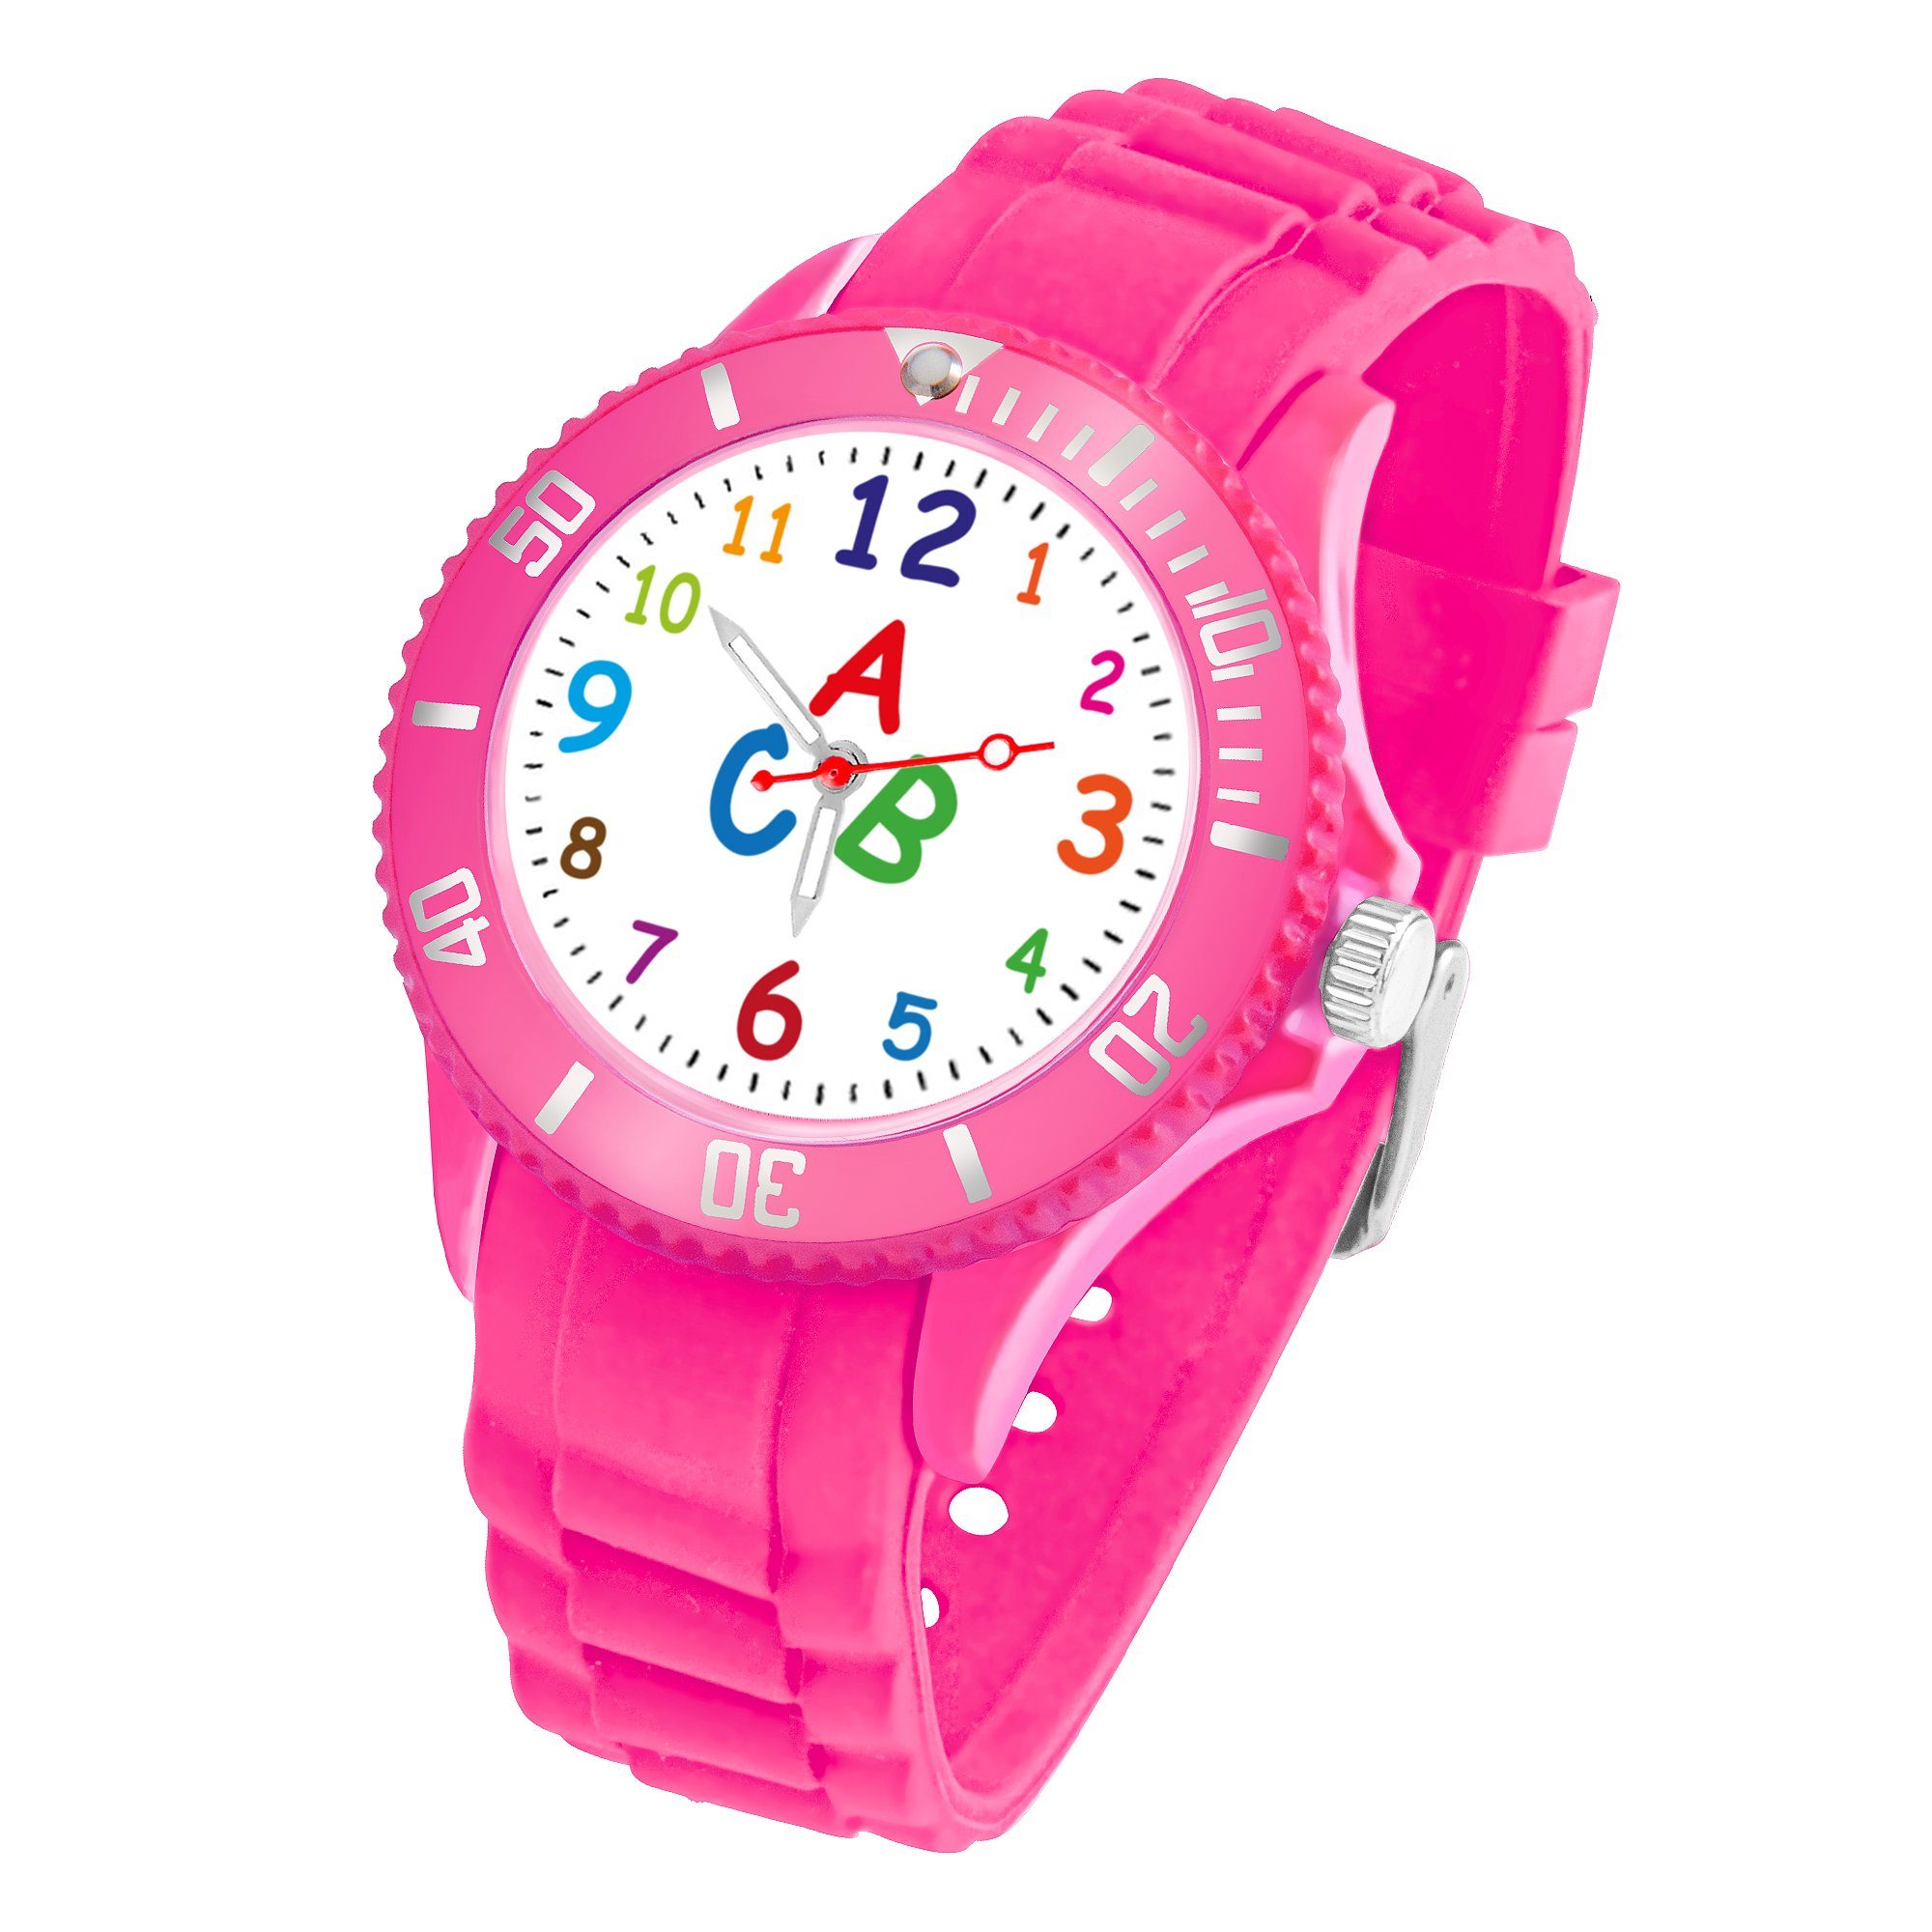 Armbanduhr 34mm Silikon Farbige Kinder Bunte Quarz Kinderuhr Analog Pink Quarzuhr Sportuhr Lernuhr ABC Taffstyle Silikonuhr Zahlen Bunt, Uhr